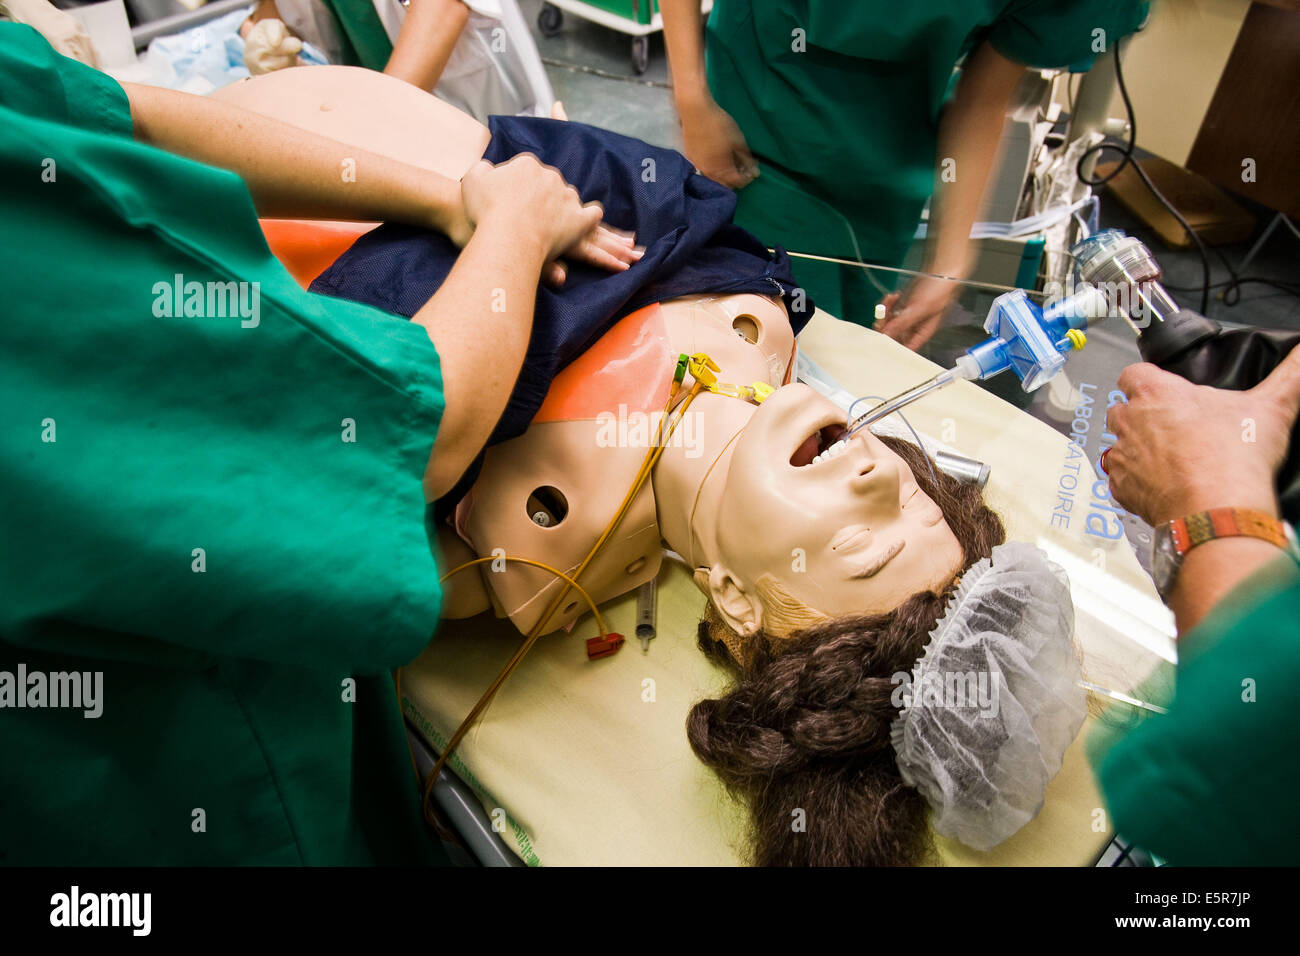 Medical training, Patient simulator (pregnant woman), Emergency